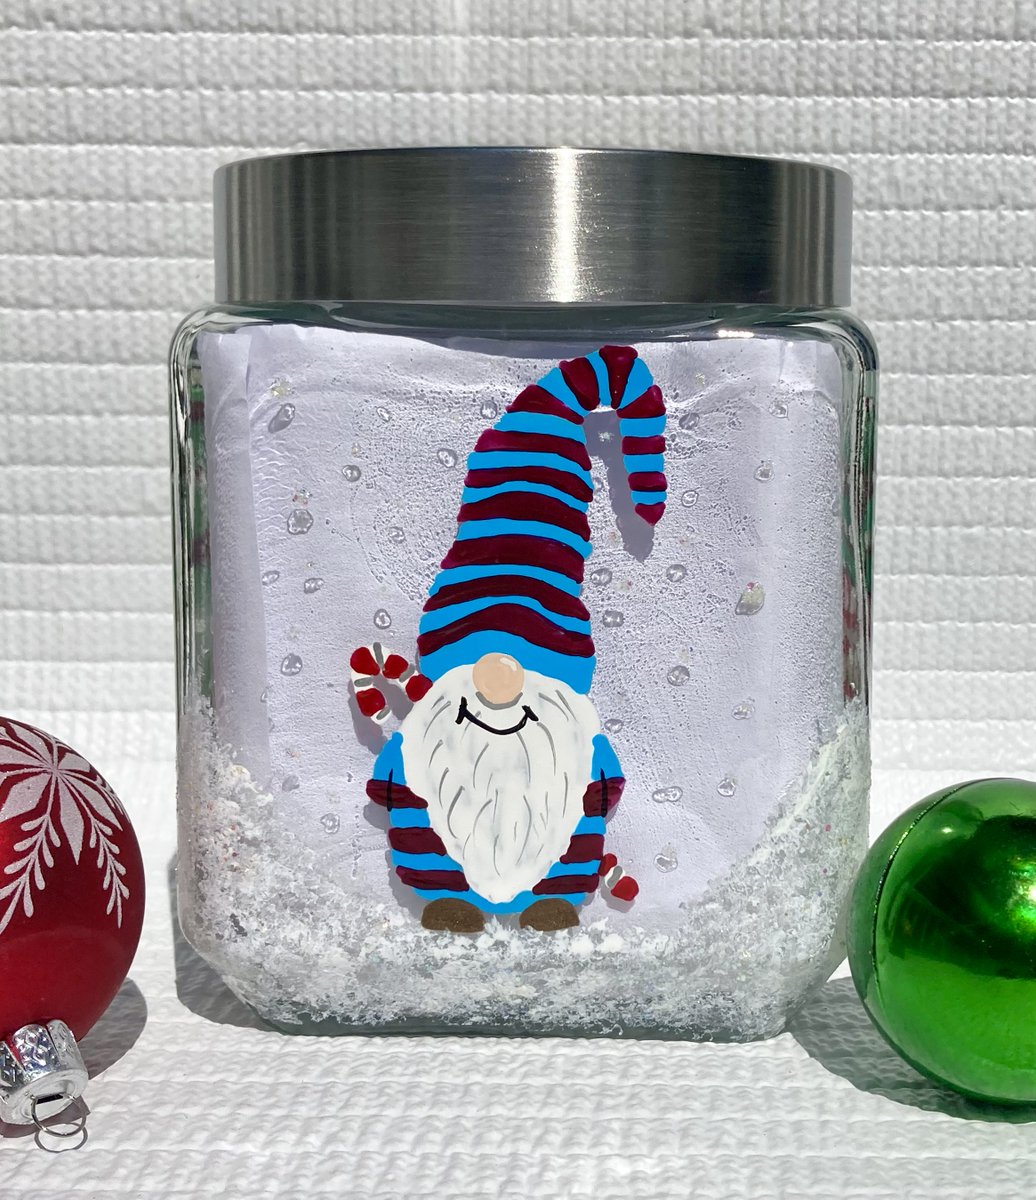 Christmas gnomes etsy.com/listing/156276… #canister #gnomes #candyjar #SMILEtt23 #Christmasgifts #gnomelovergift #etsyshop #CraftBizParty #etsychristmas